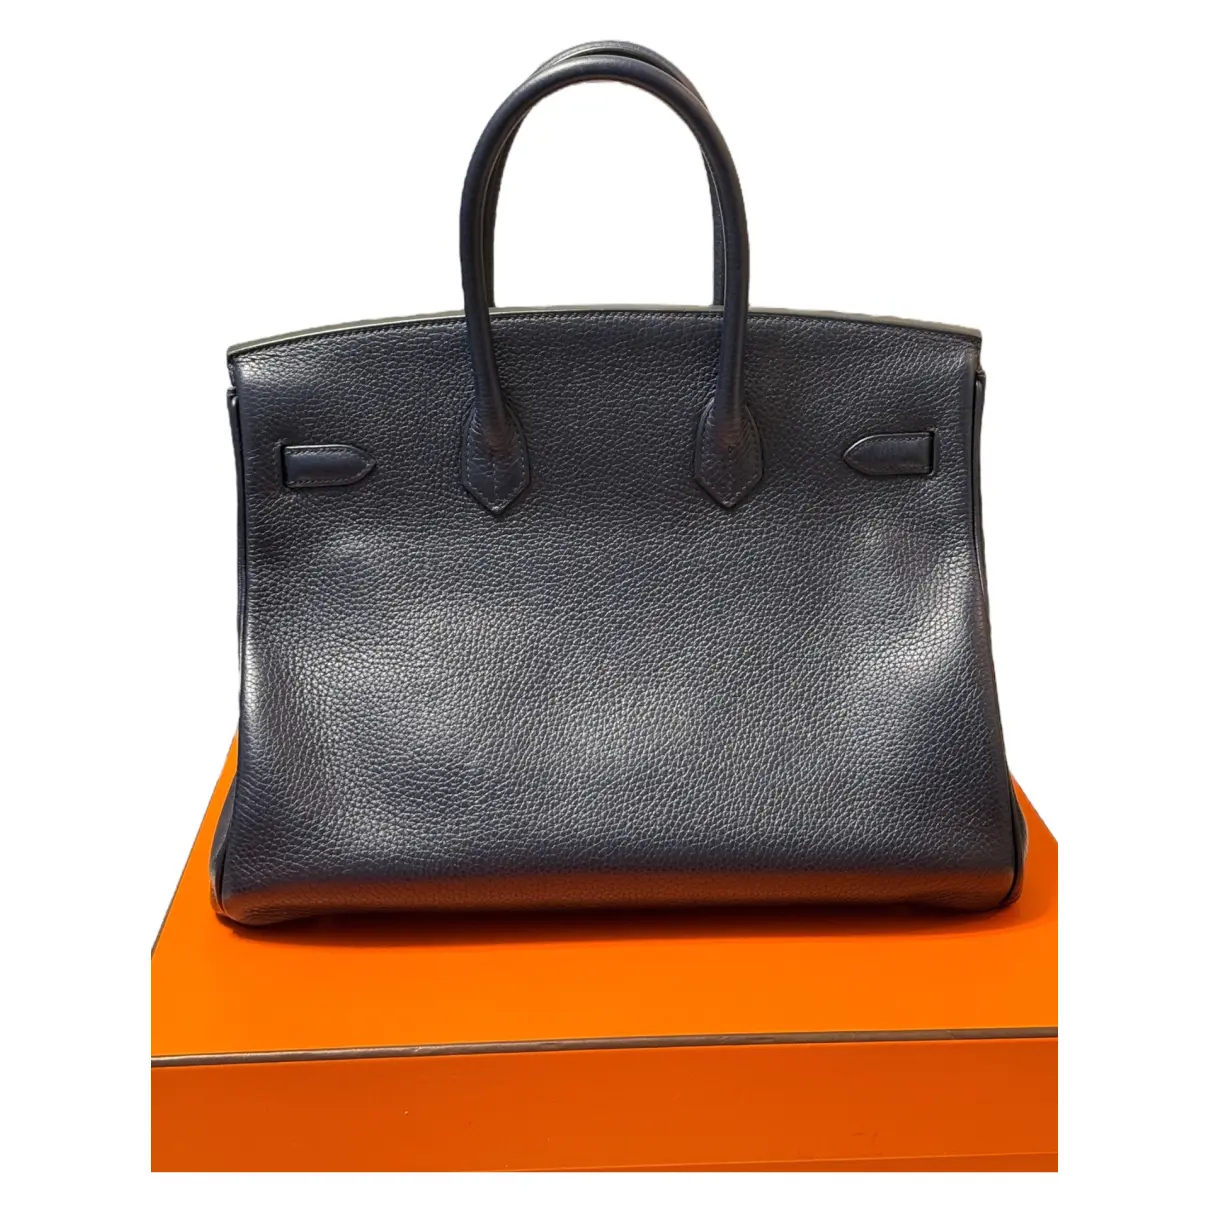 Birkin 35 leather handbag Hermès